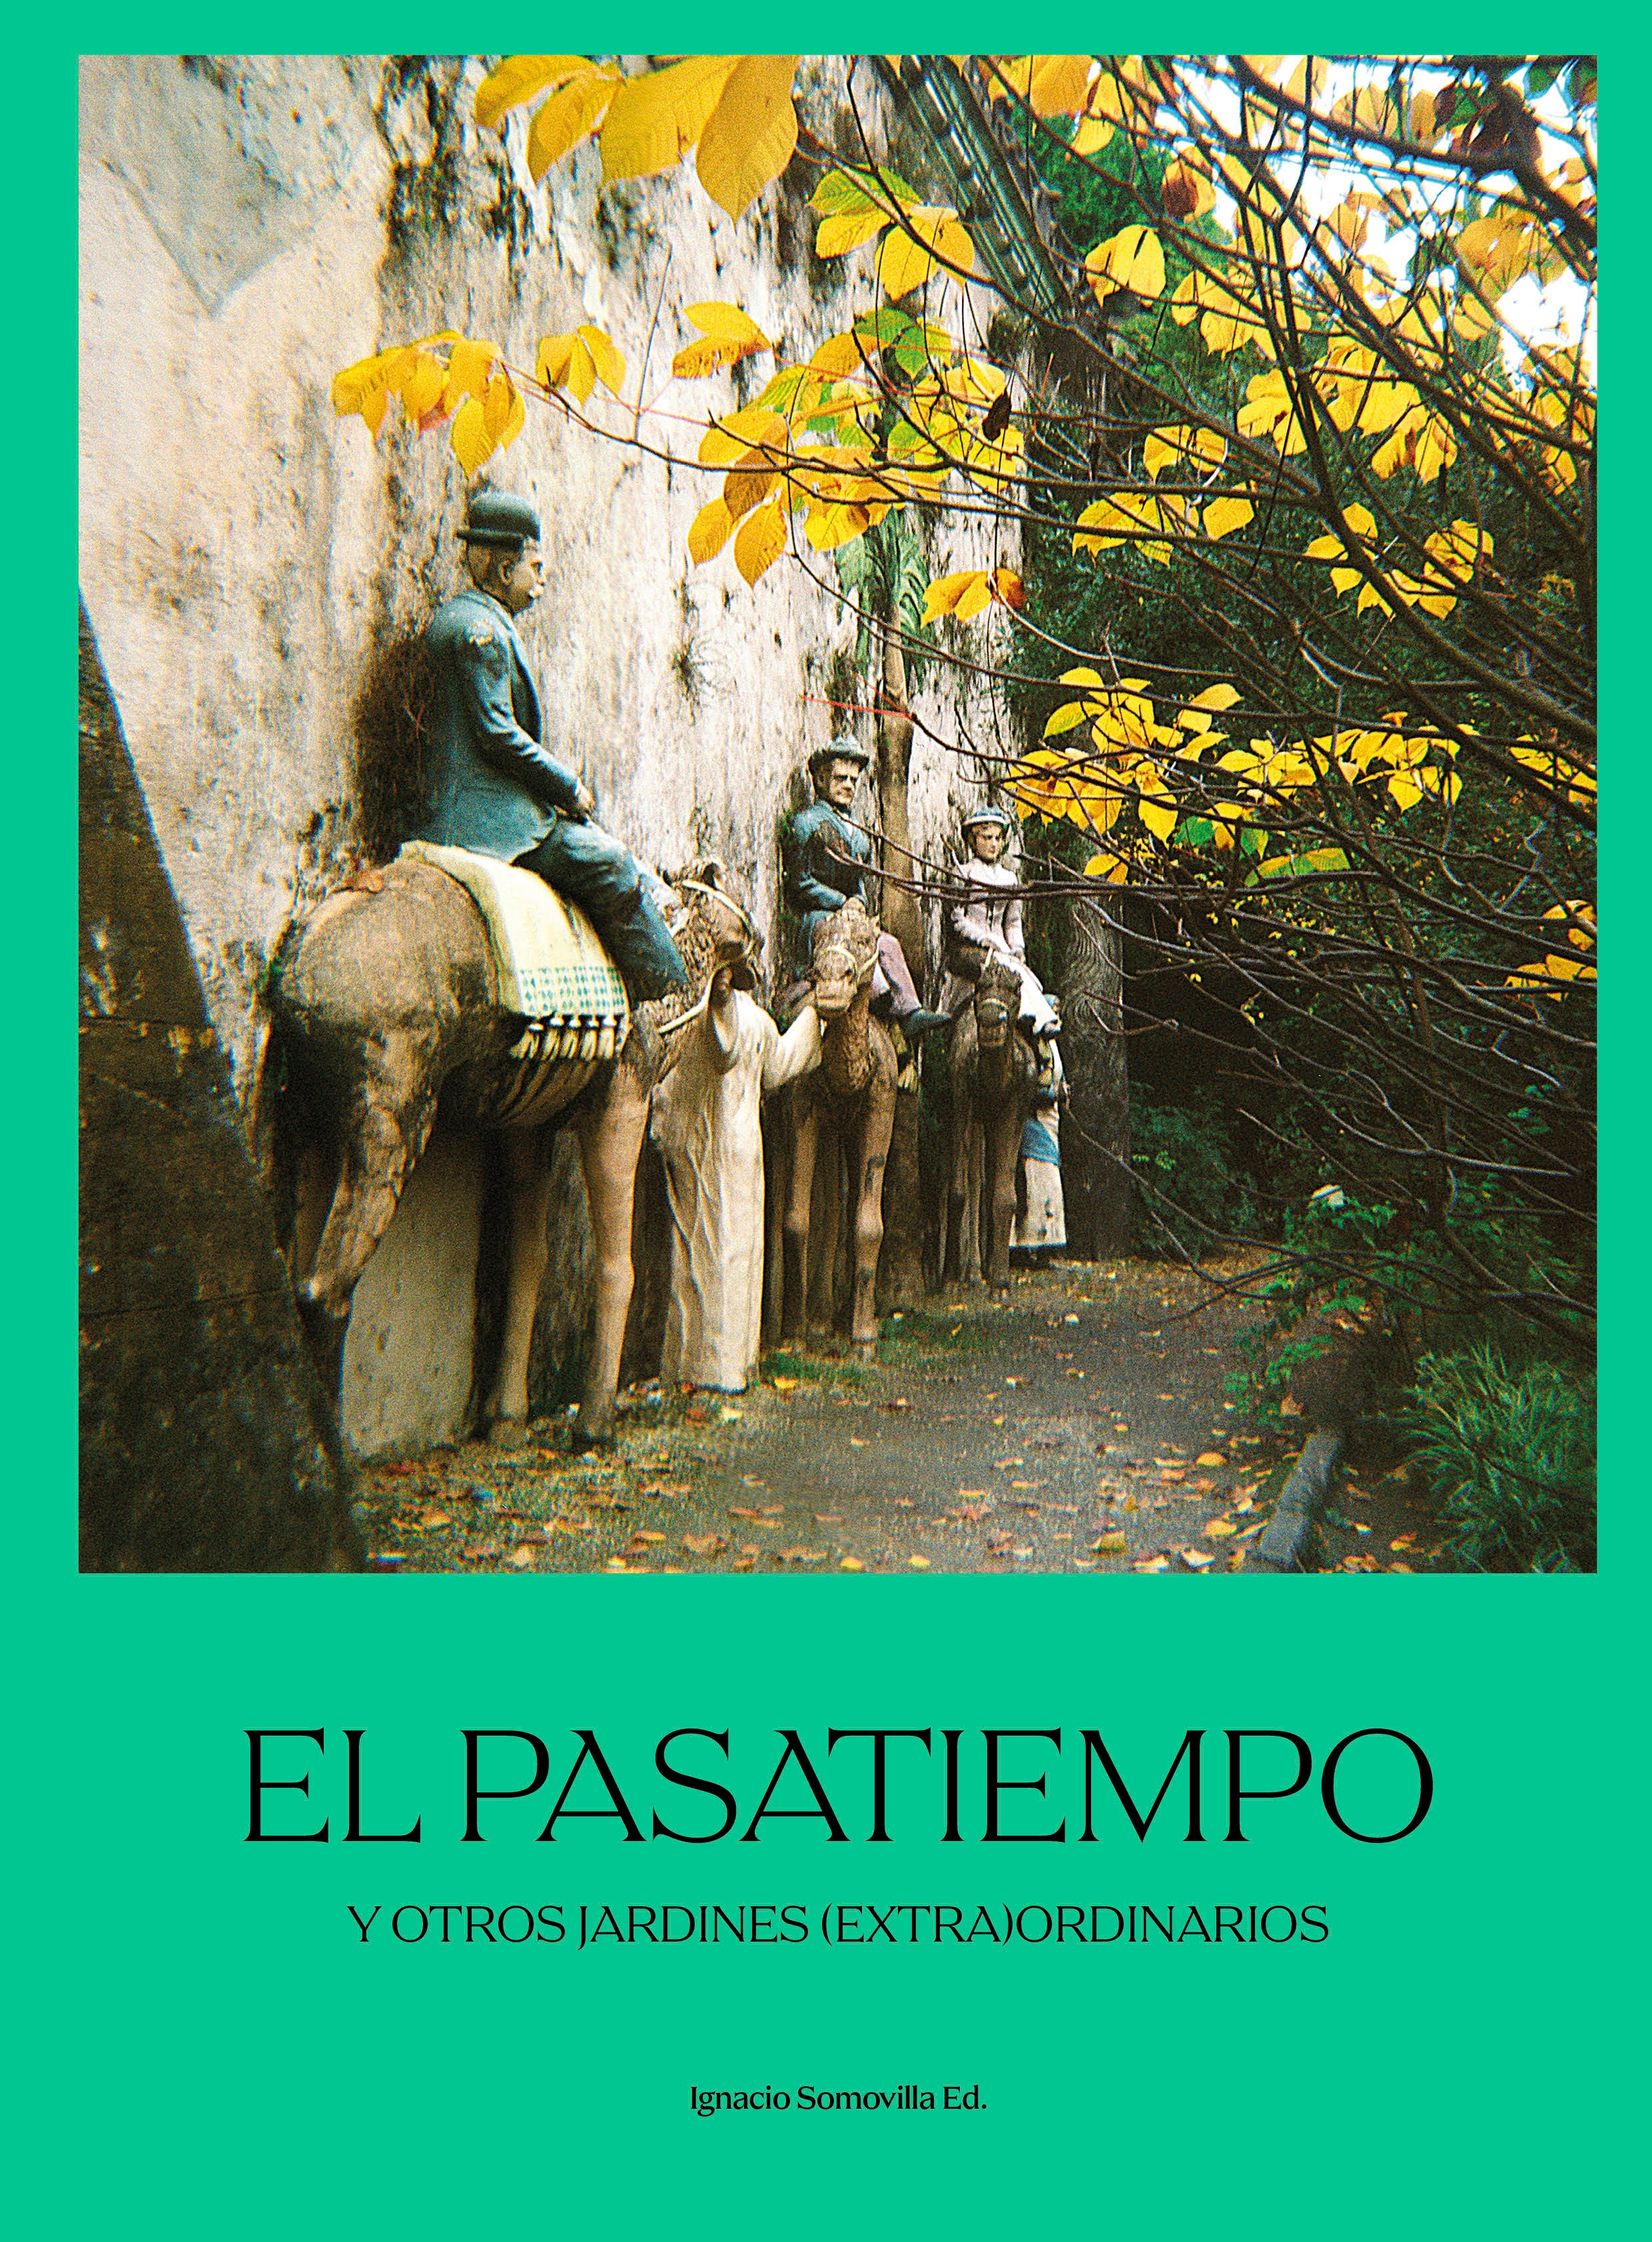 El Pasatiempo and other (extra)ordinary gardens.